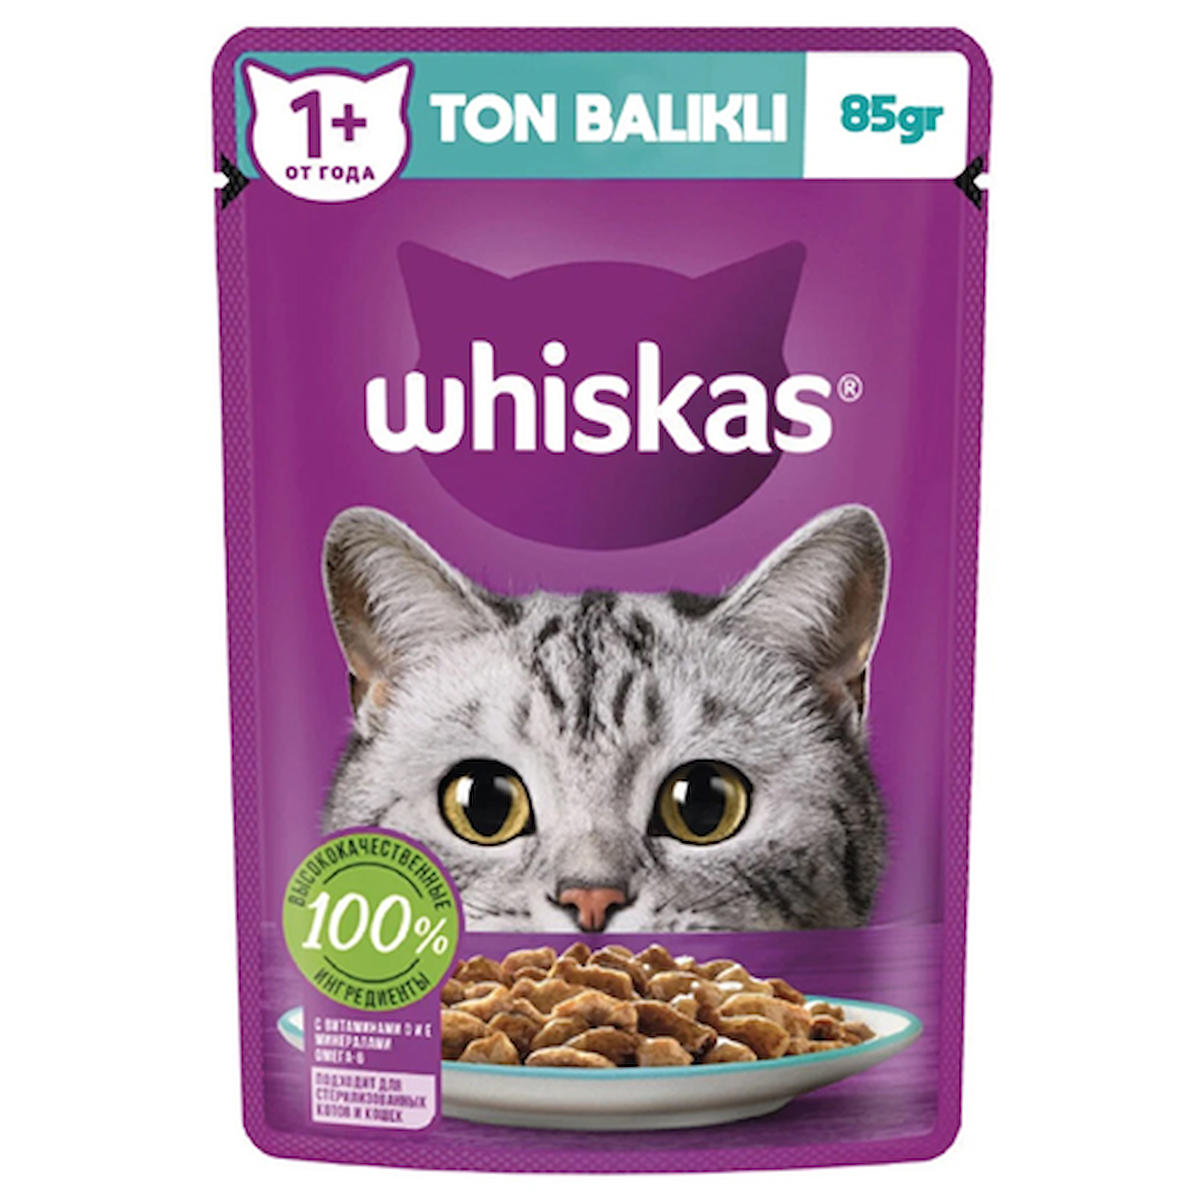 Whiskas 1+ Ton Balıklı Yetişkin Yaş Kedi Maması 85 gr